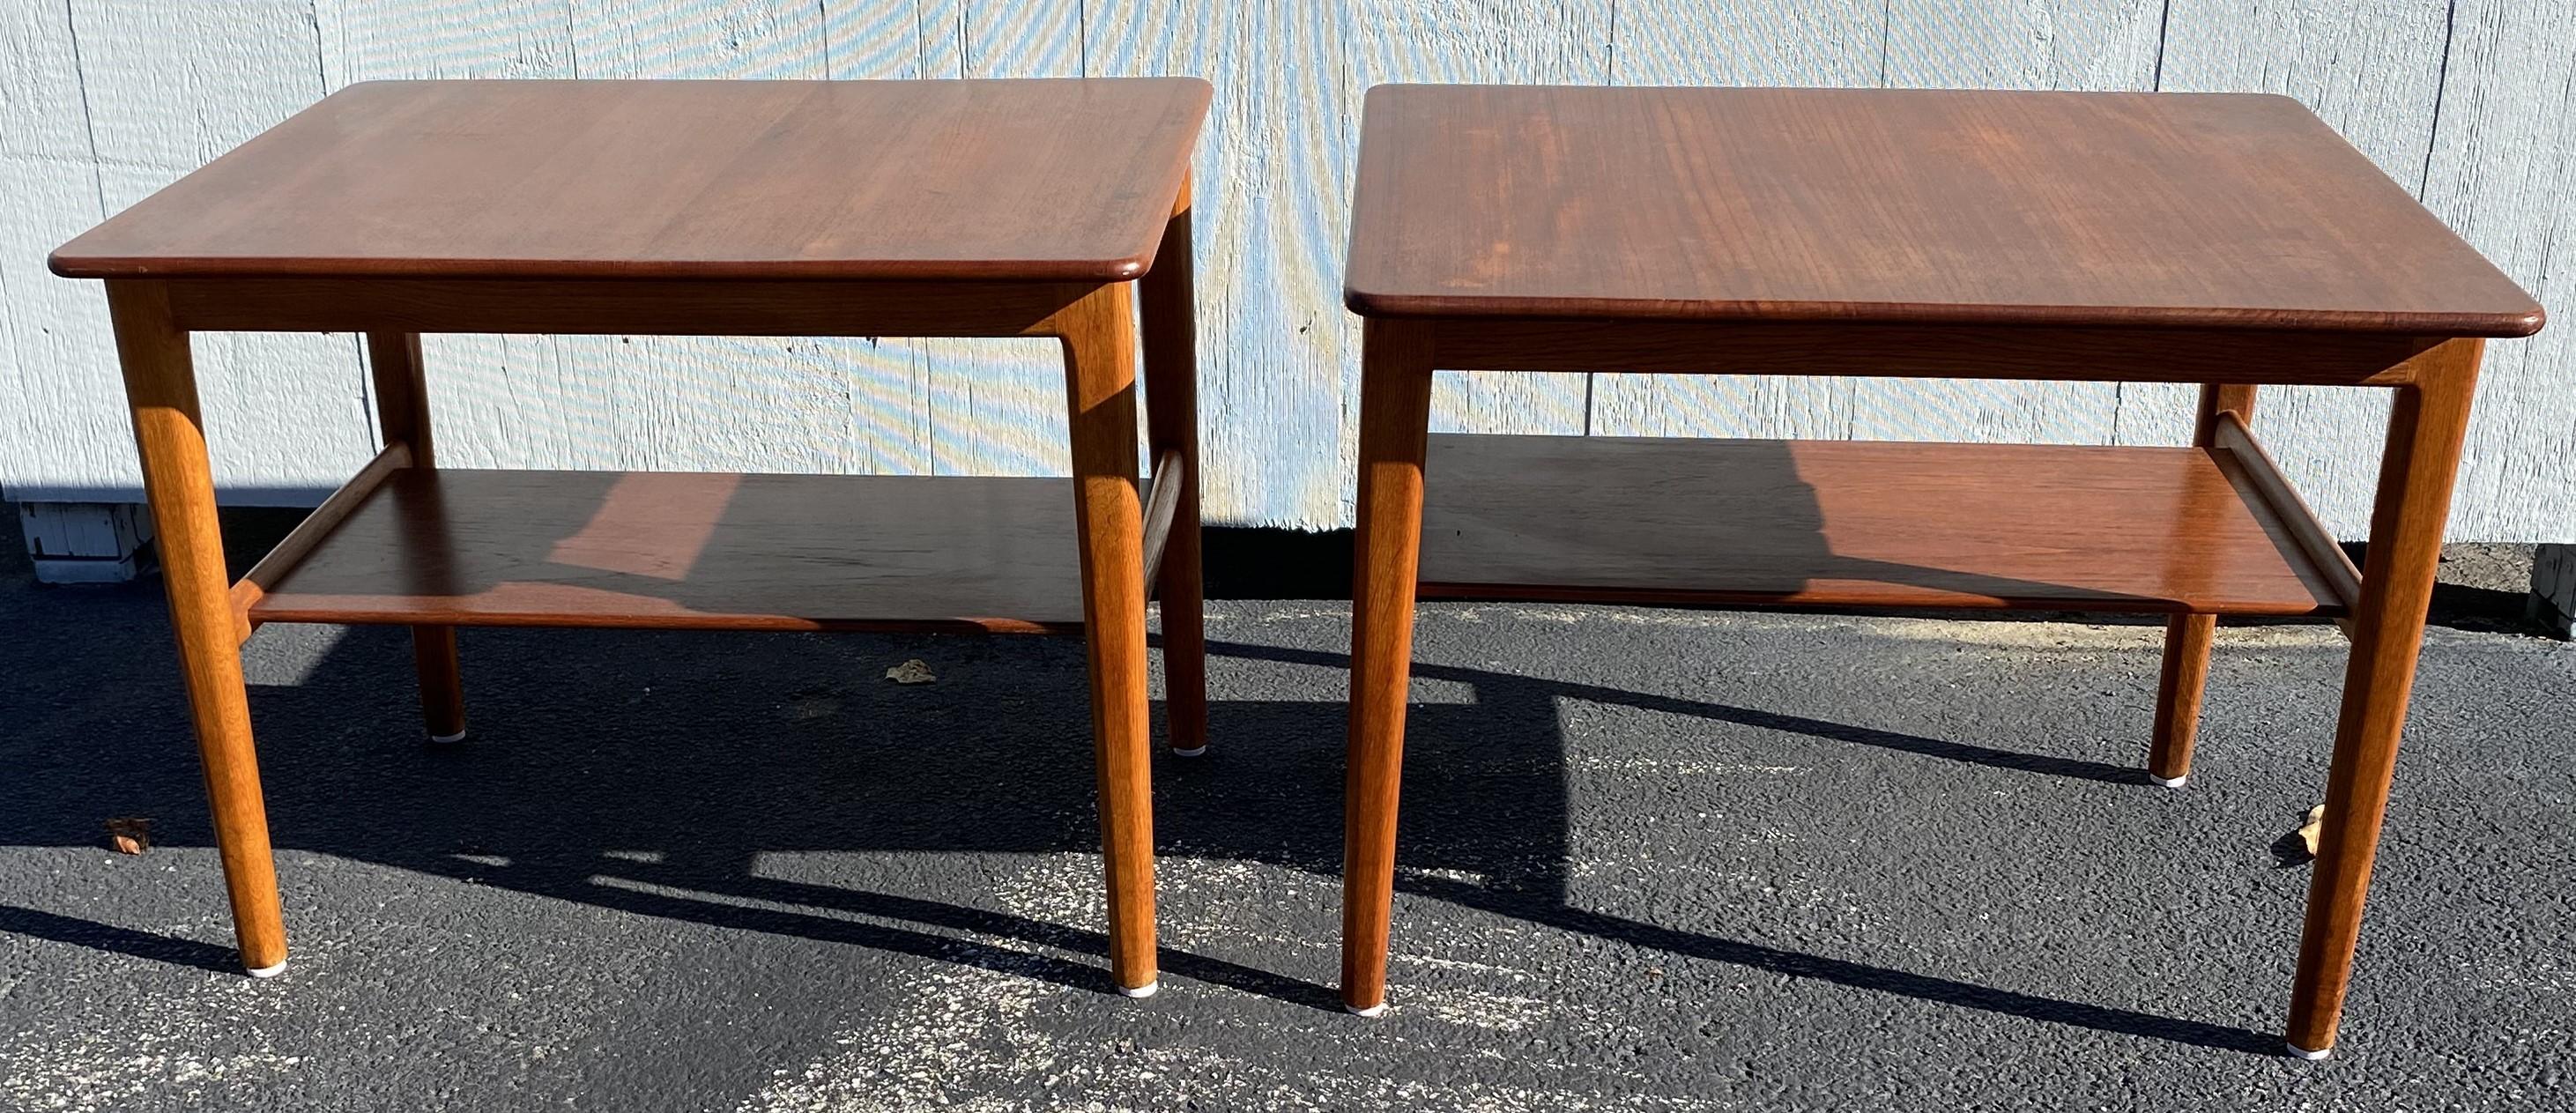 Johannes Hansen Hans Wegner Danish Modern Teak Tables with Trays In Good Condition For Sale In Milford, NH